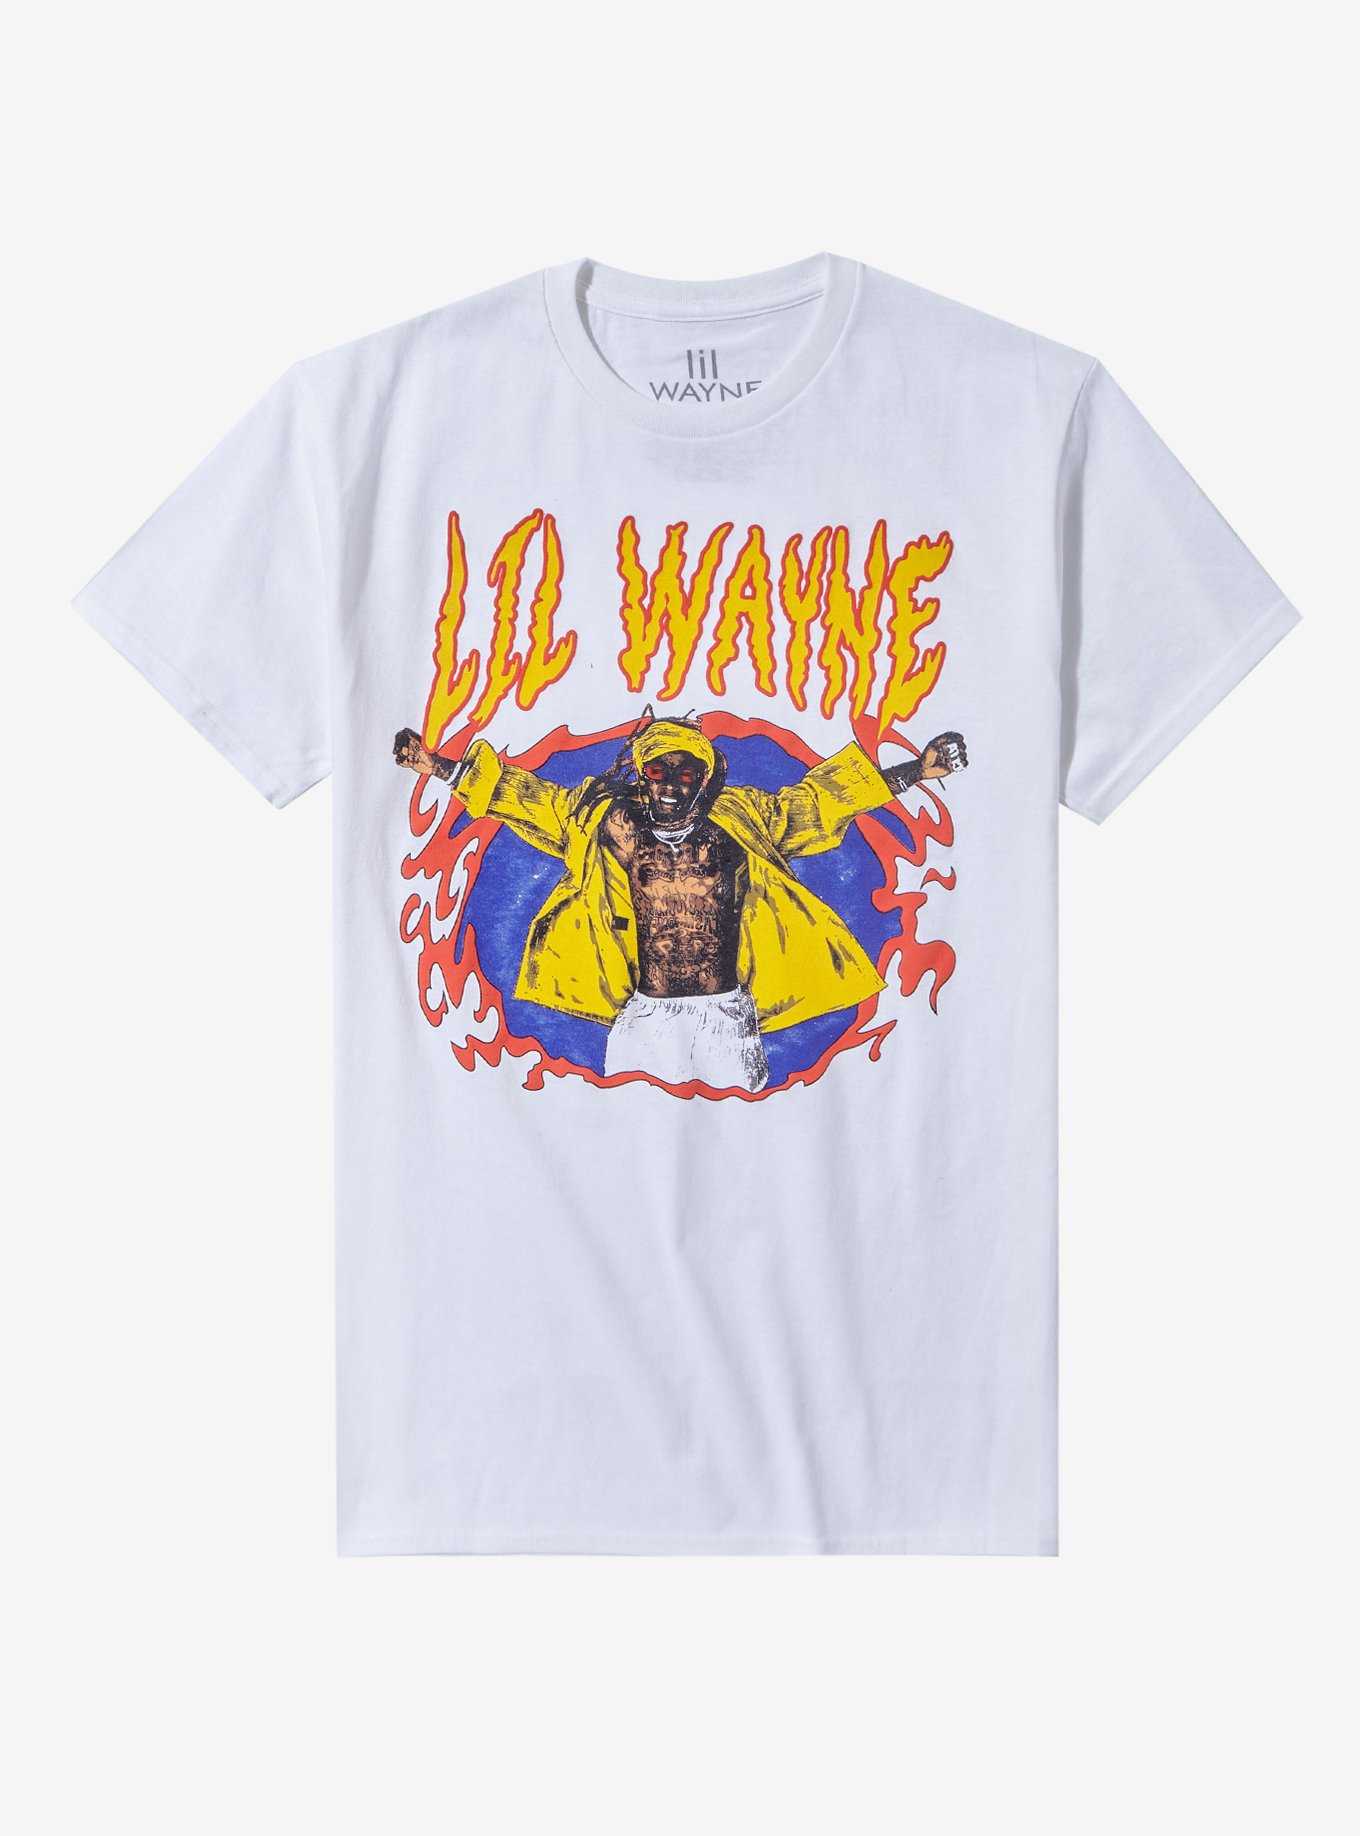 Lil Wayne Yellow Jacket Portrait Boyfriend Fit Girls T-Shirt, , hi-res